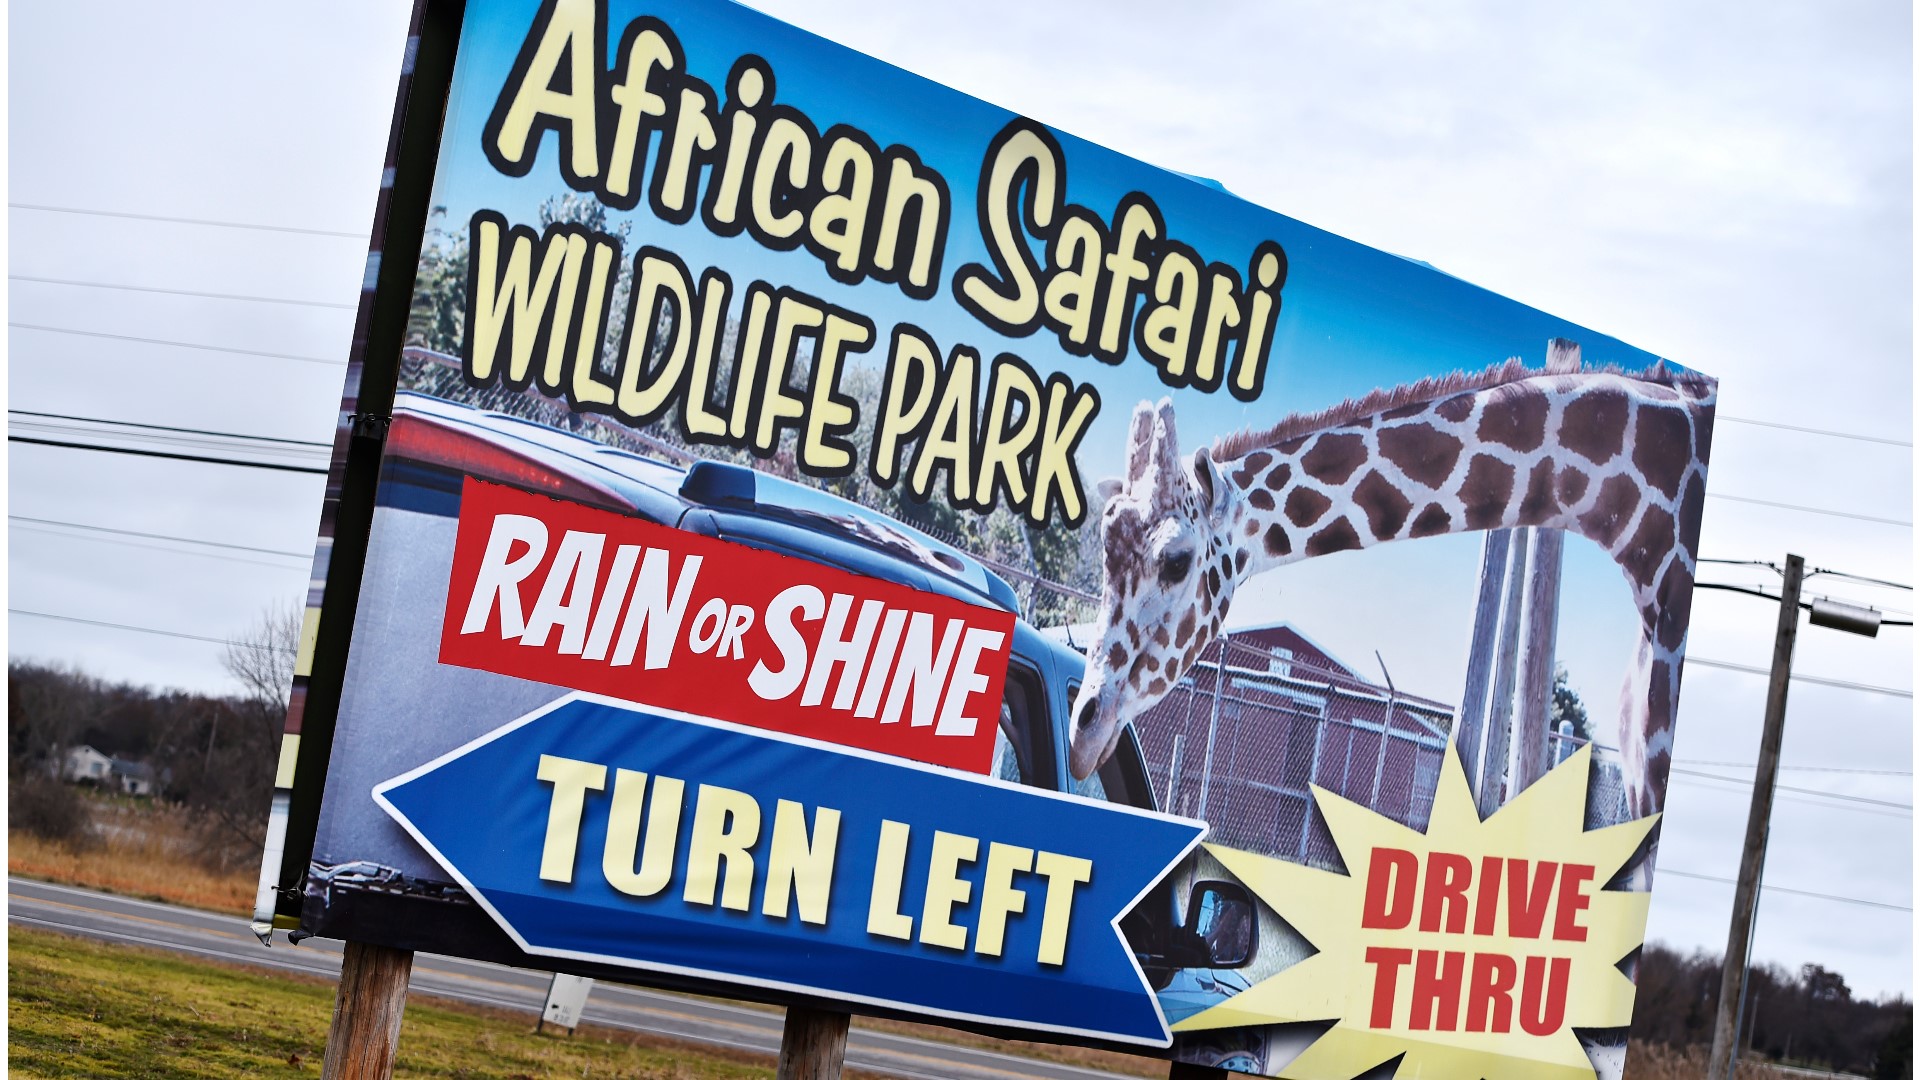 african safari in port clinton ohio